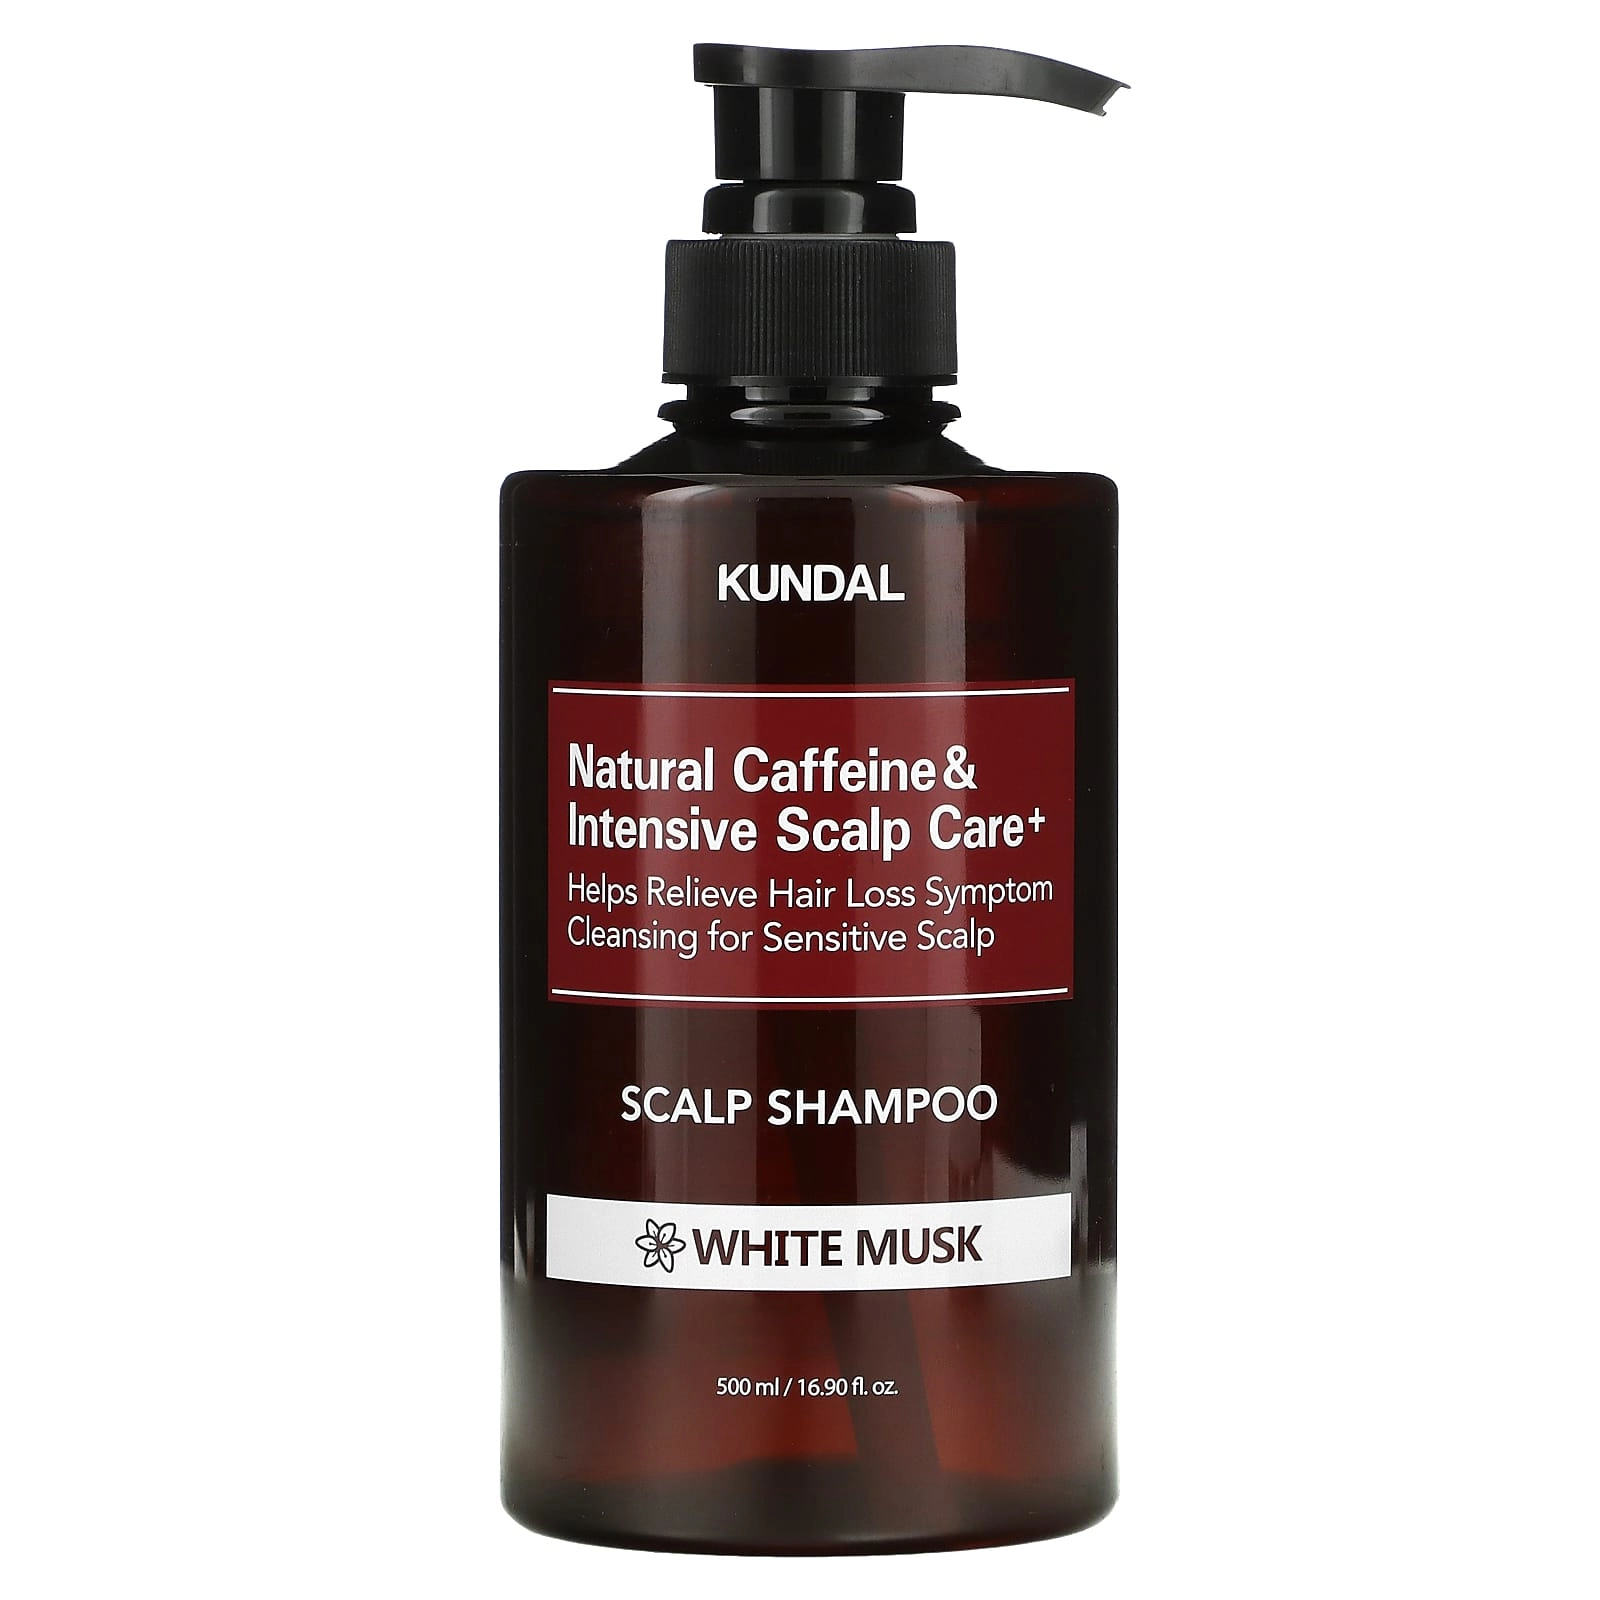 Шампунь против выпадения волос "Белый мускус" - Kundal Natural Caffeine & Intensive Scalp Care Shampoo White Musk, 500 мл - фото N2